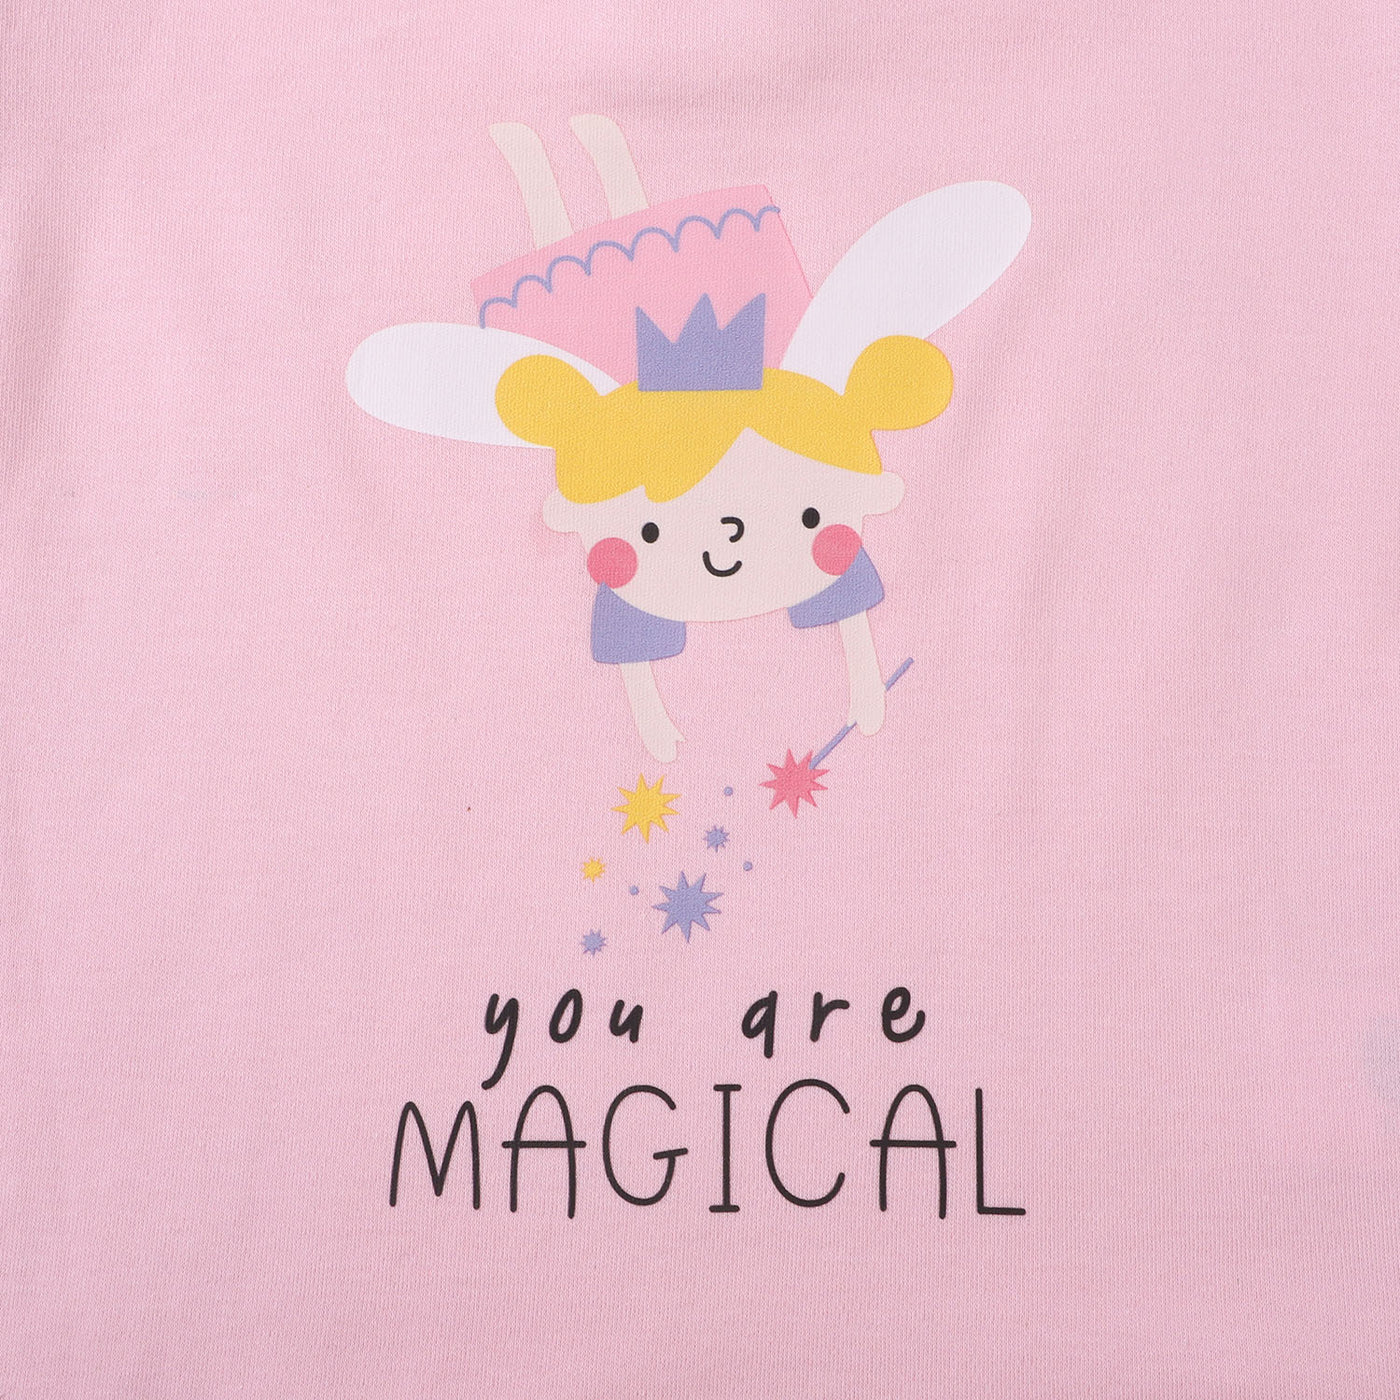 Infant Girls Cotton 2PCs Suit Magical World - Baby Pink